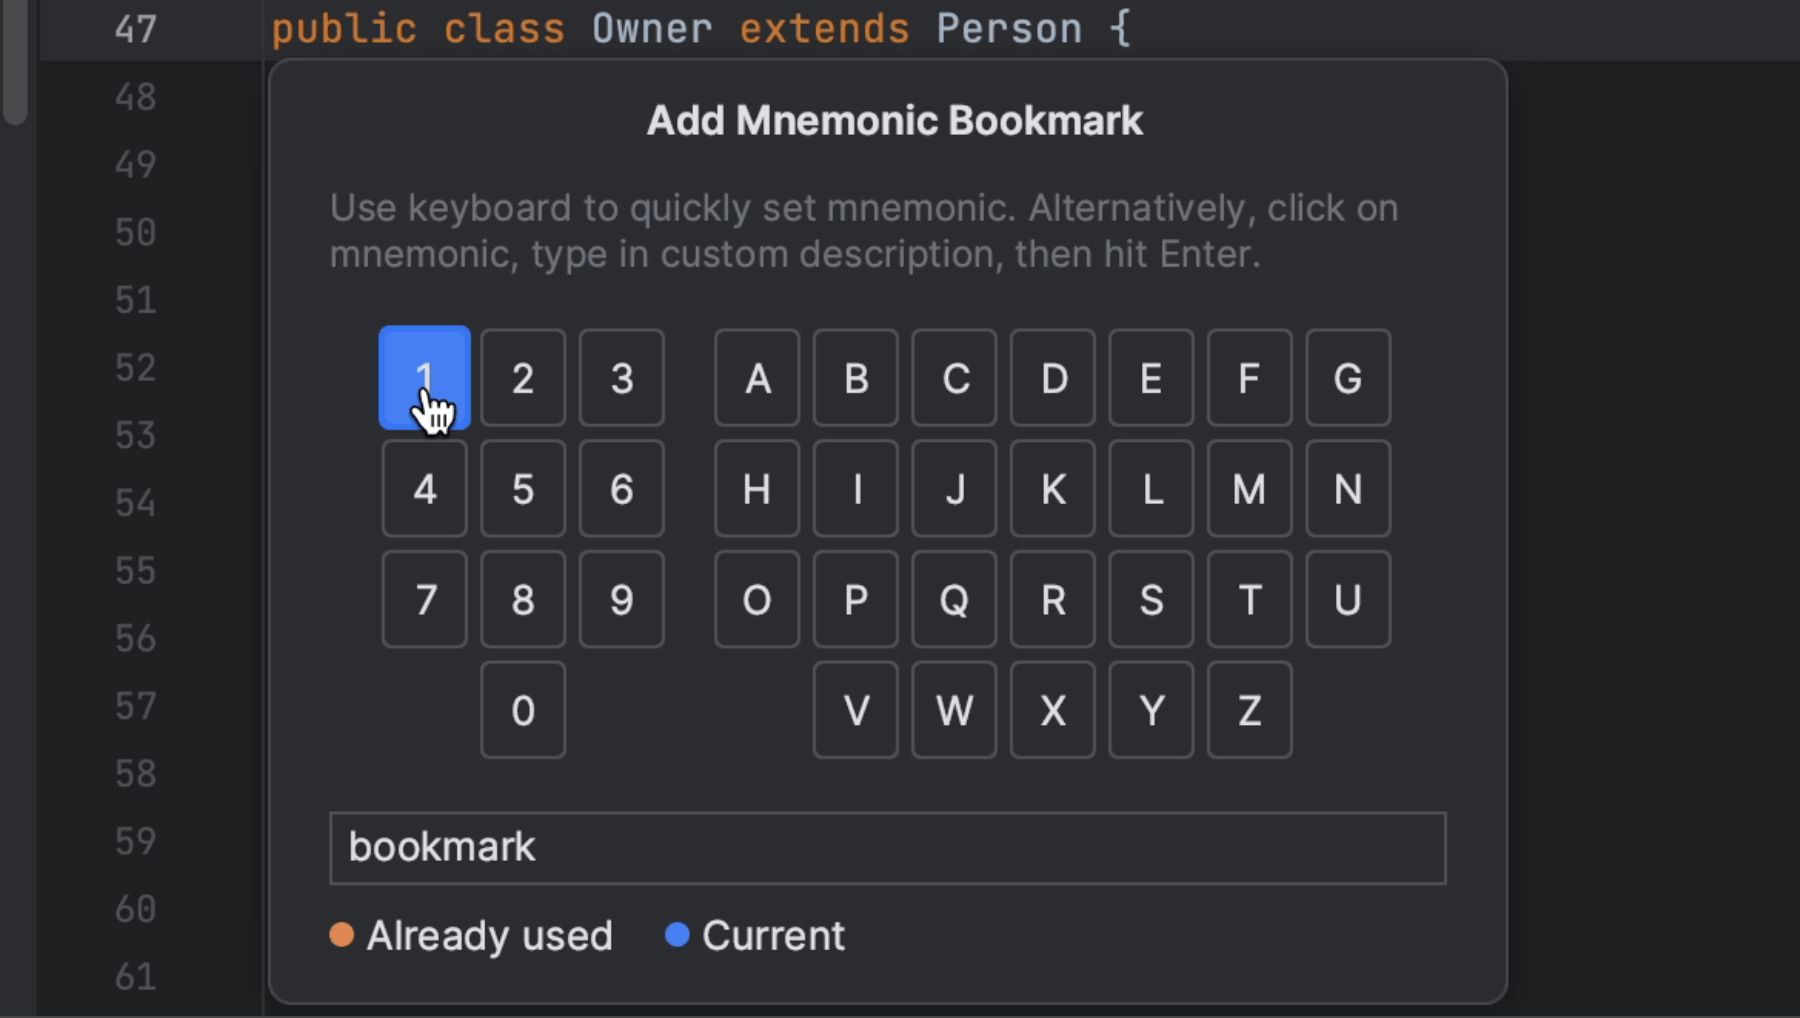 Add Mnemonic Bookmark